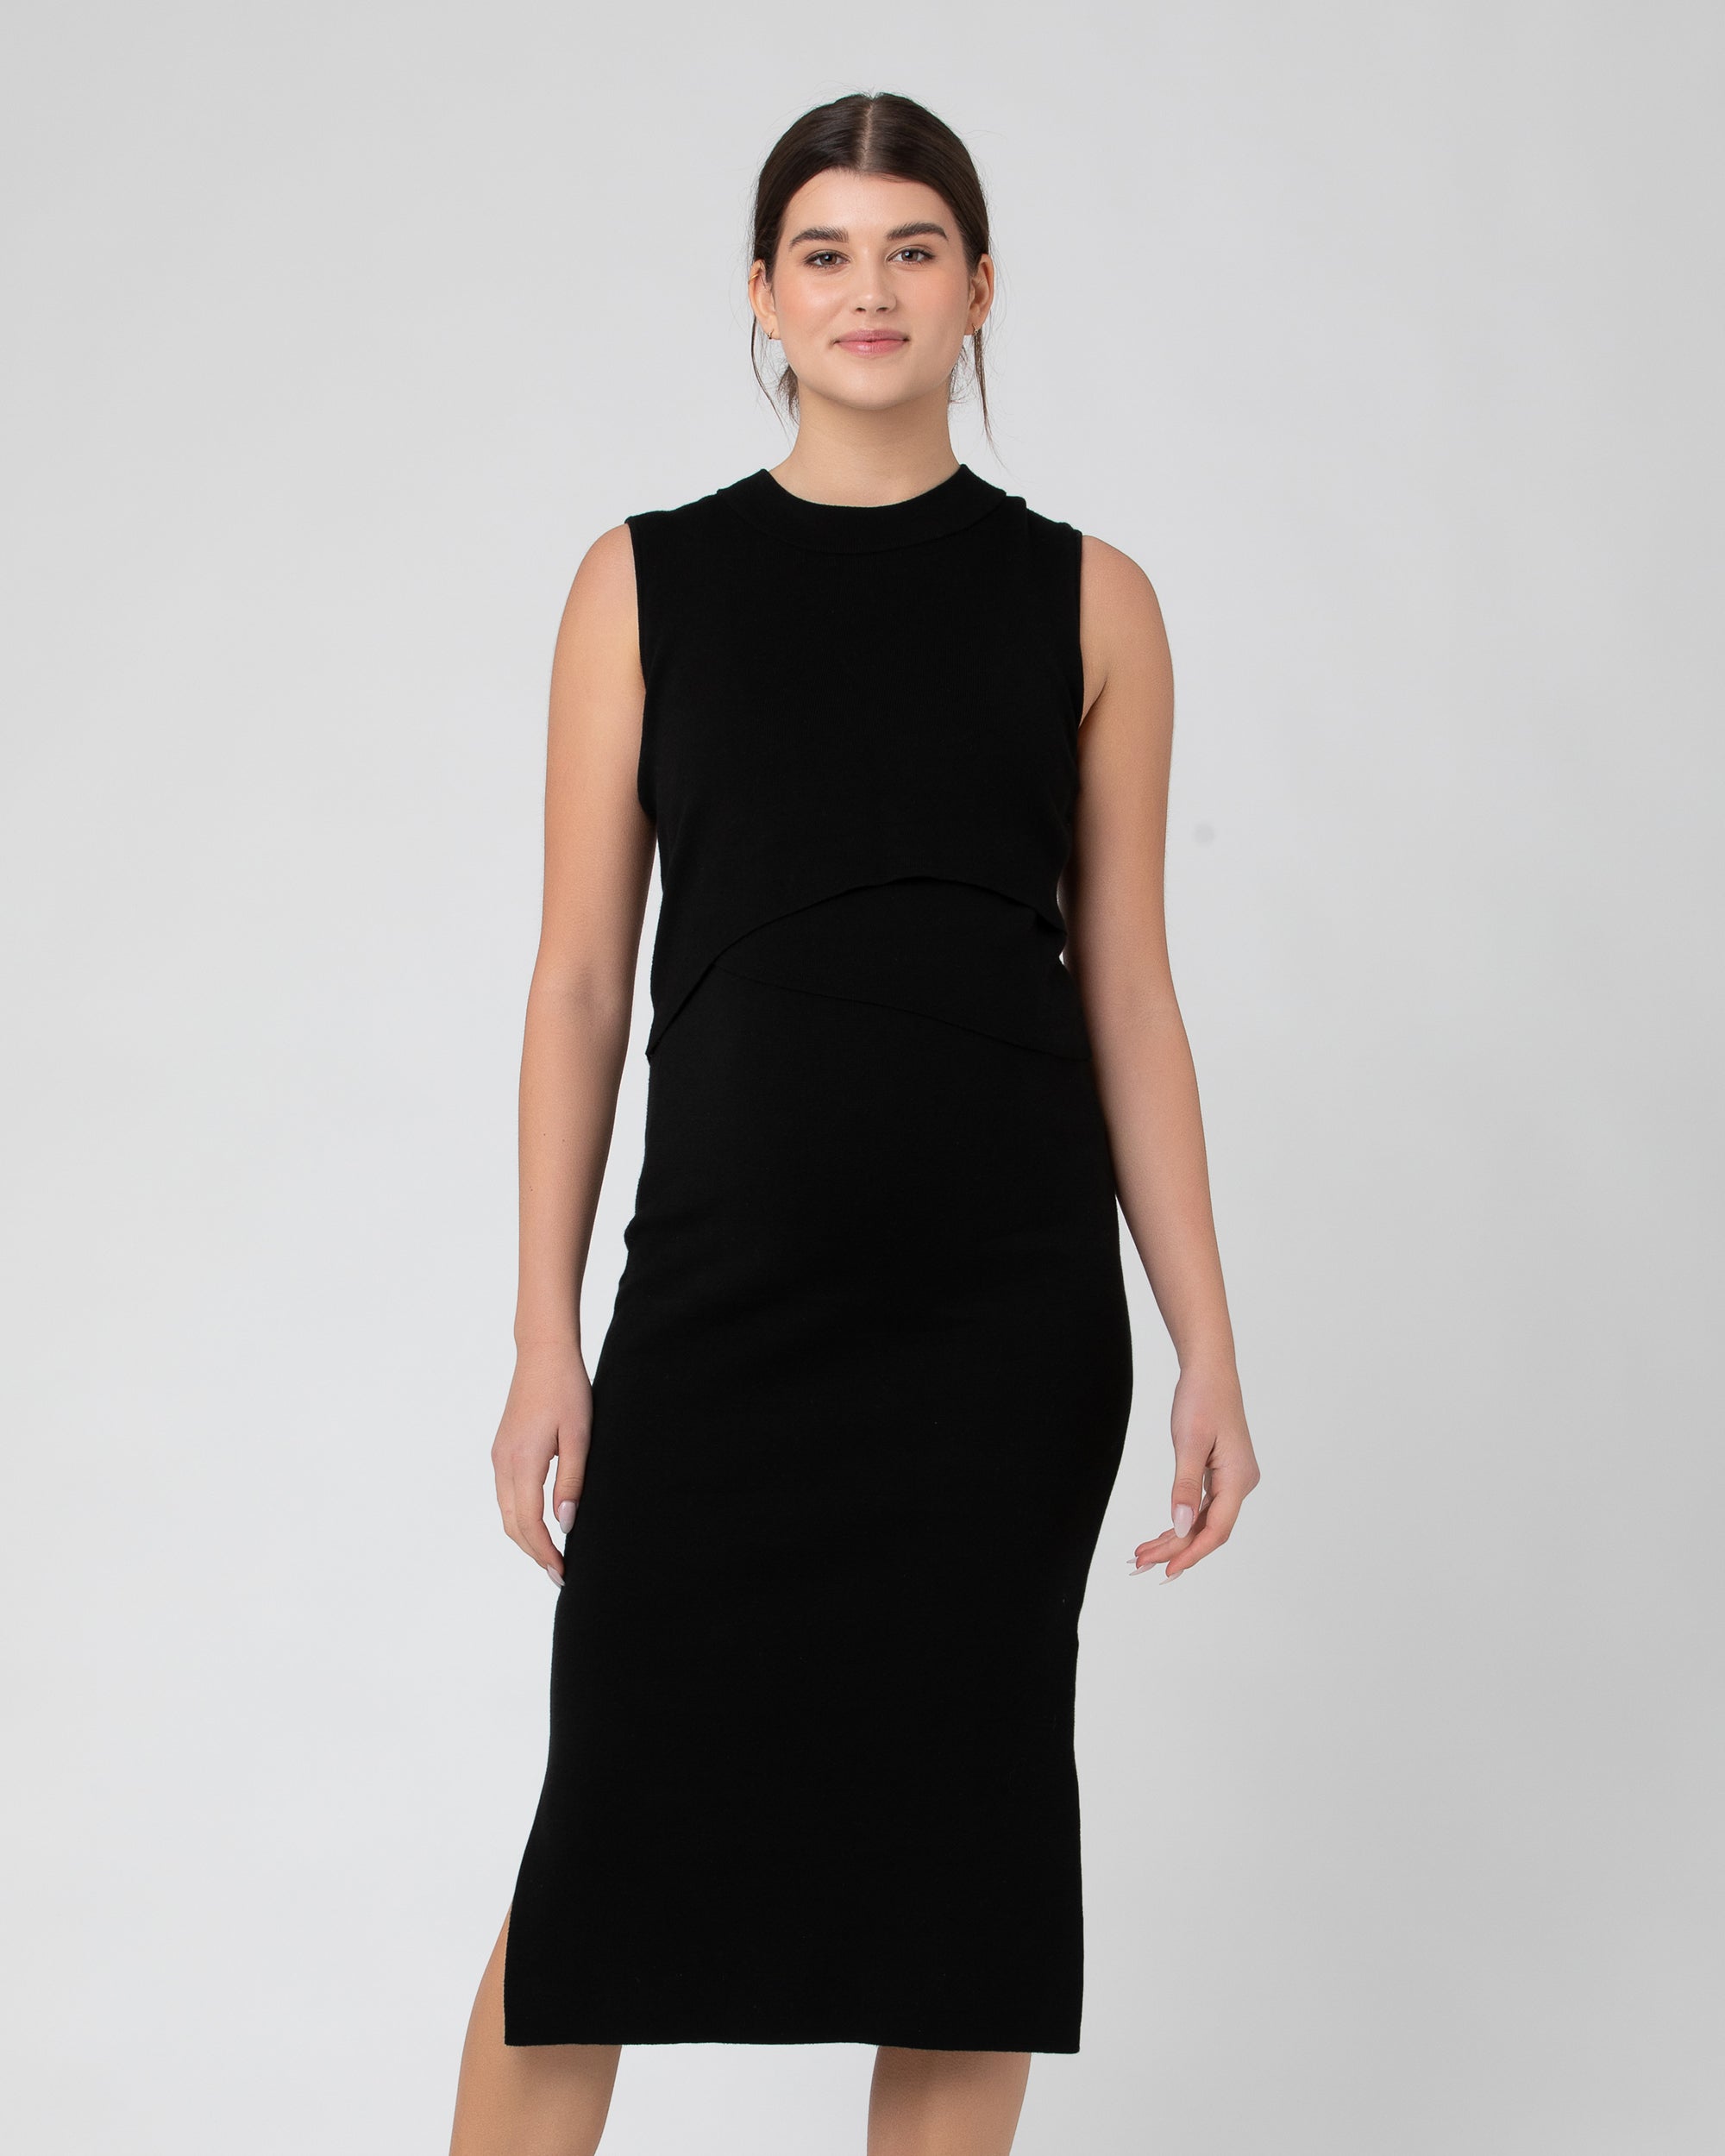 Layered Knit Nursing Dress Black